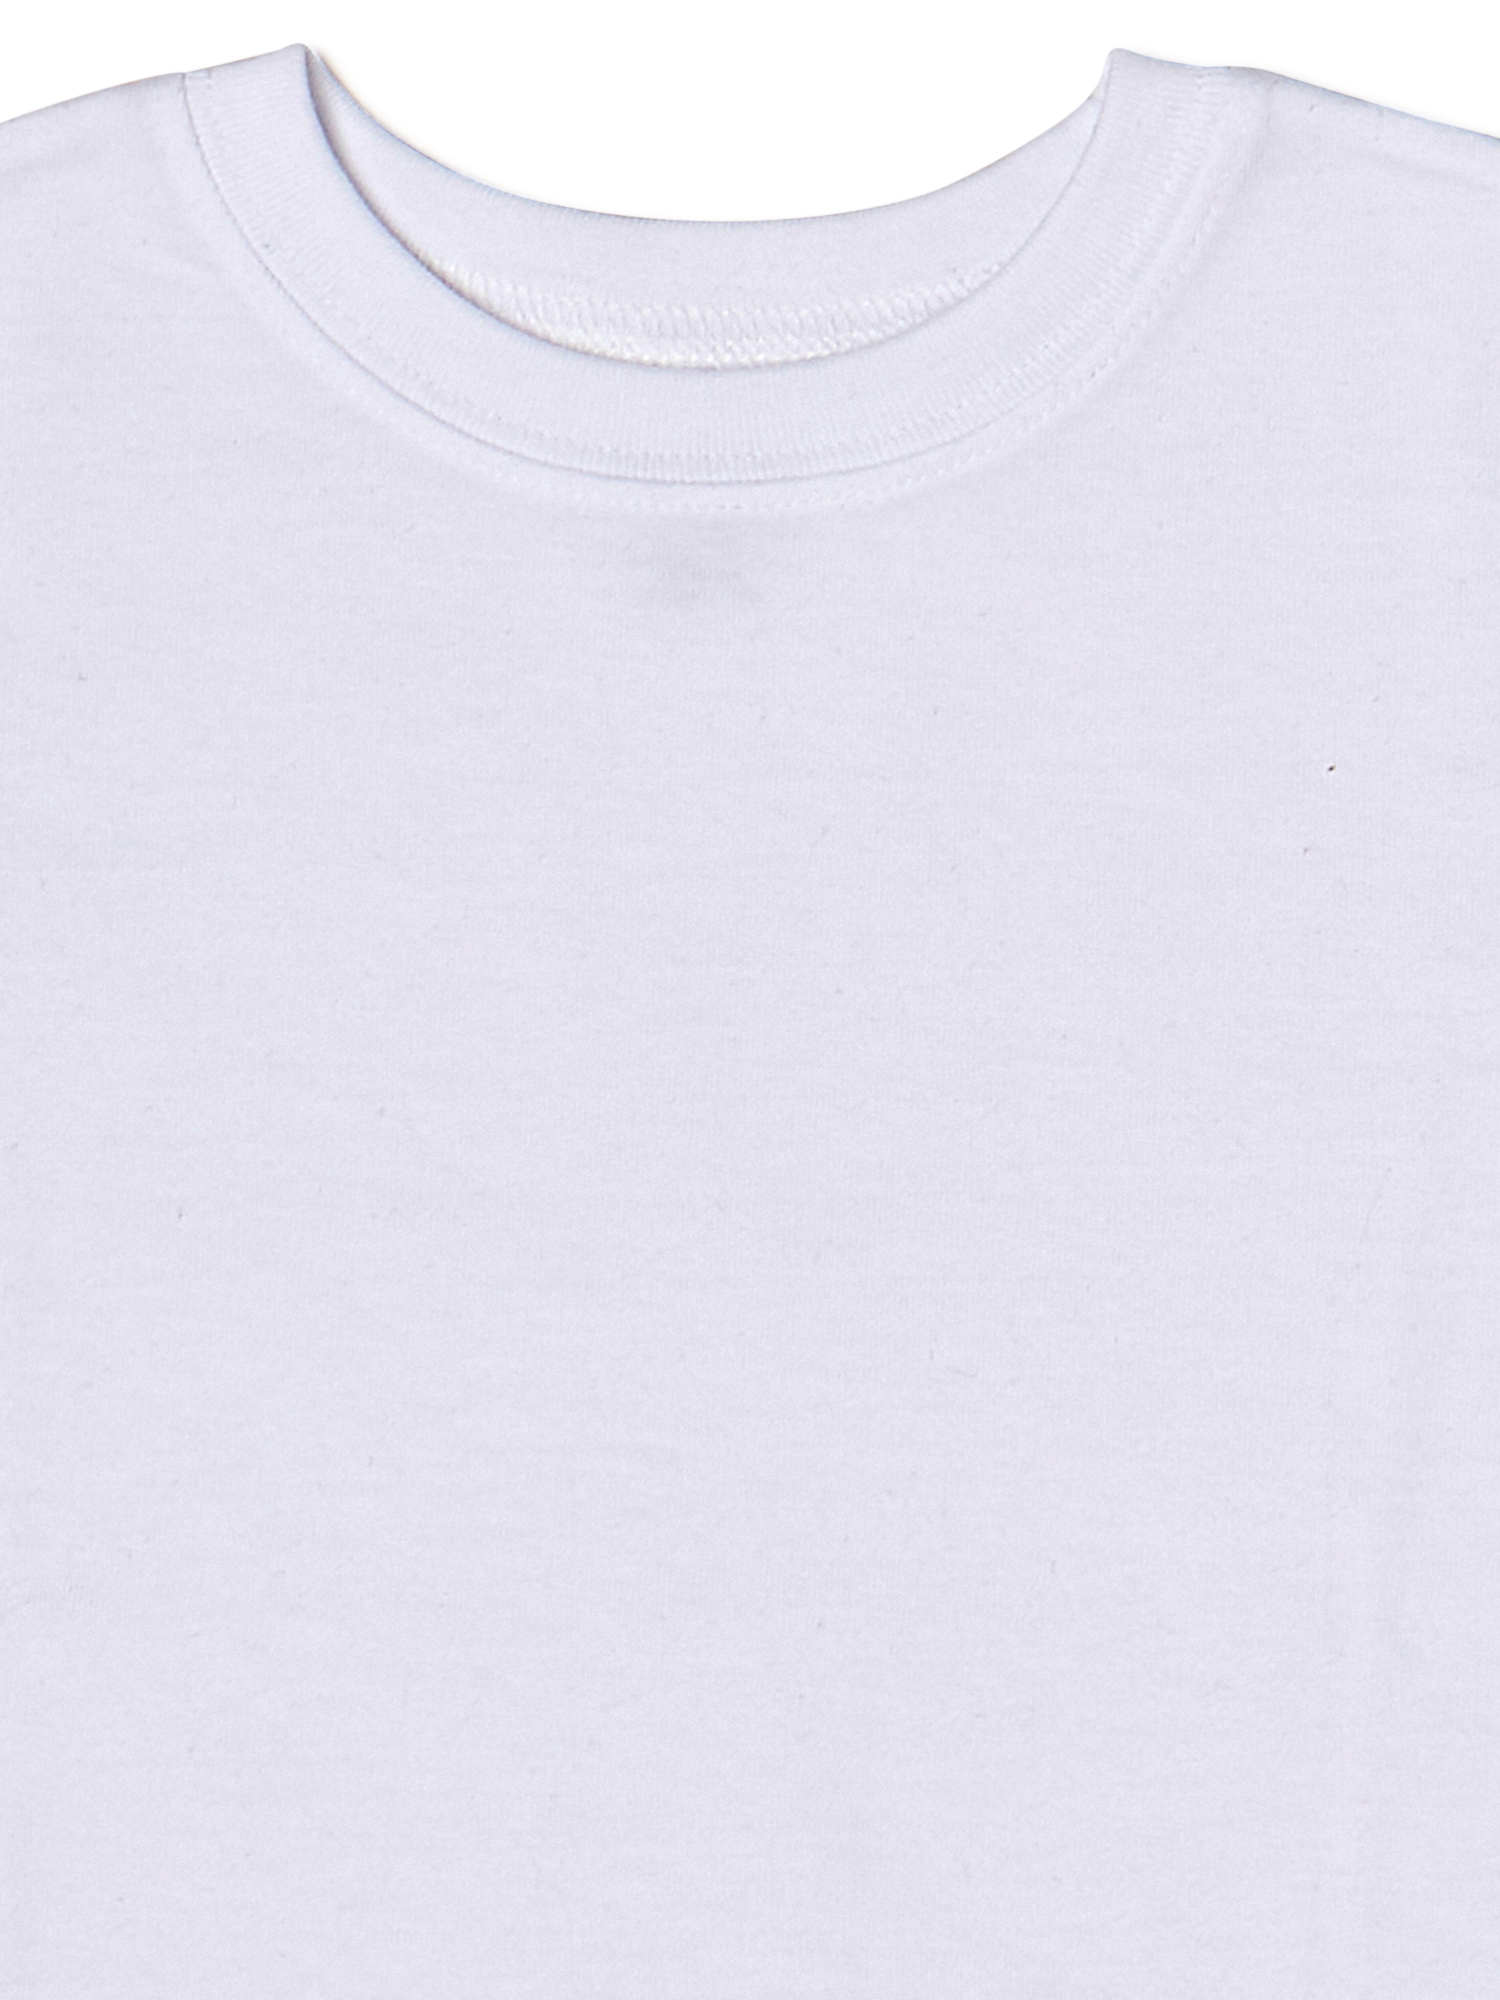 Garanimals Toddler Boy Basic T-Shirts Multipack, 5-Pack, Sizes 12M-5T - image 4 of 4